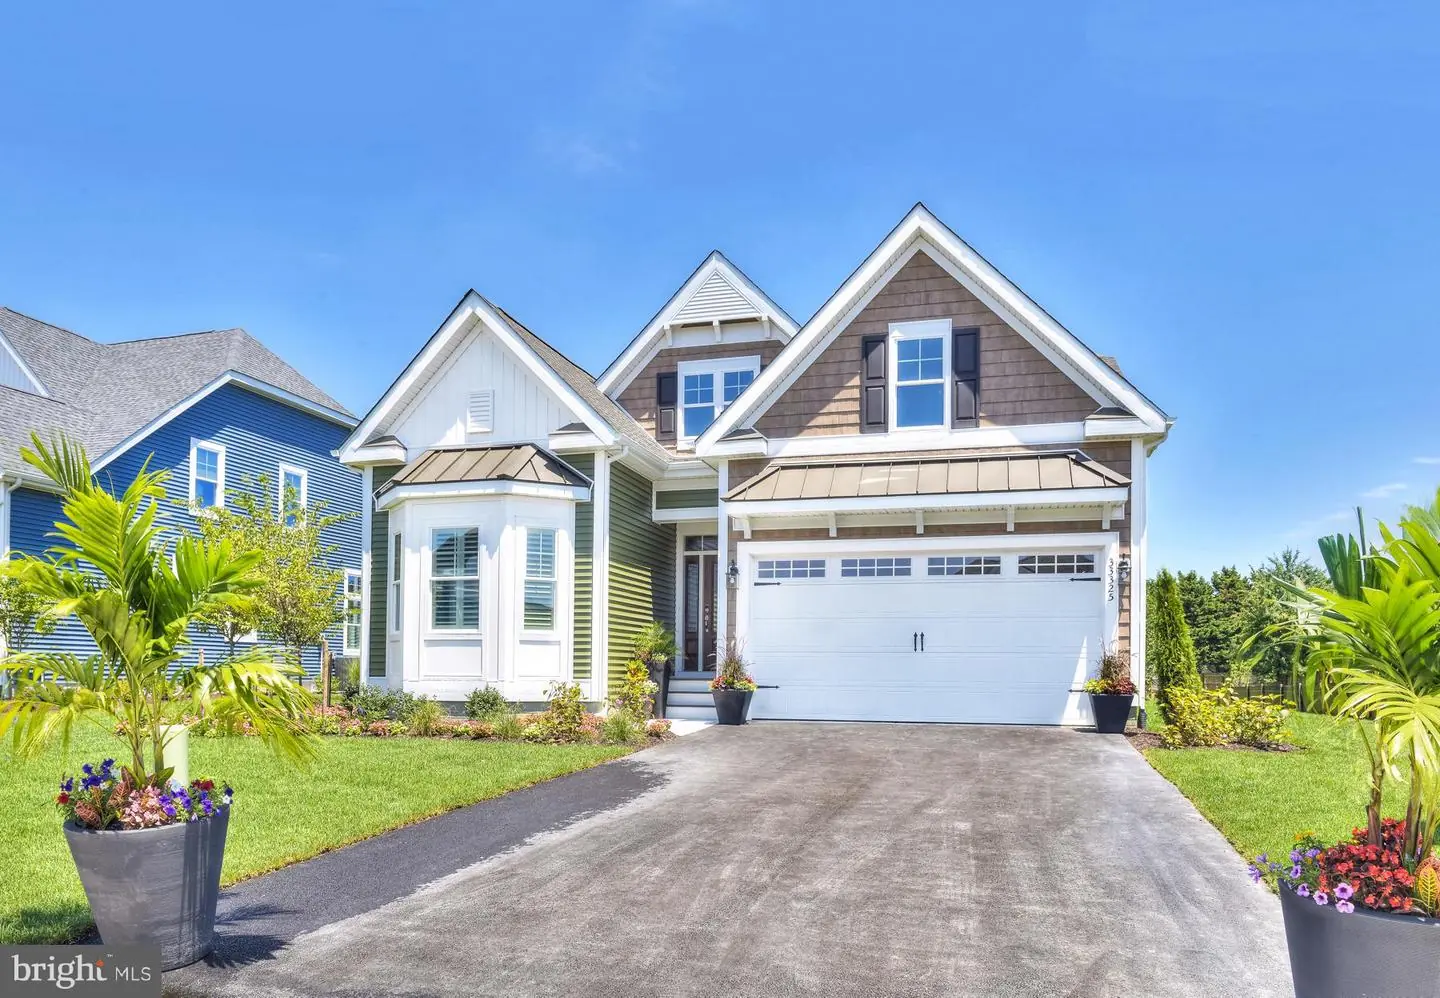 DESU2031076-801956180360-2024-01-30-16-56-08 Bluebell To-be-built Home Tbd | Millsboro, DE Real Estate For Sale | MLS# Desu2031076  - Lisa Mathena Real Estate